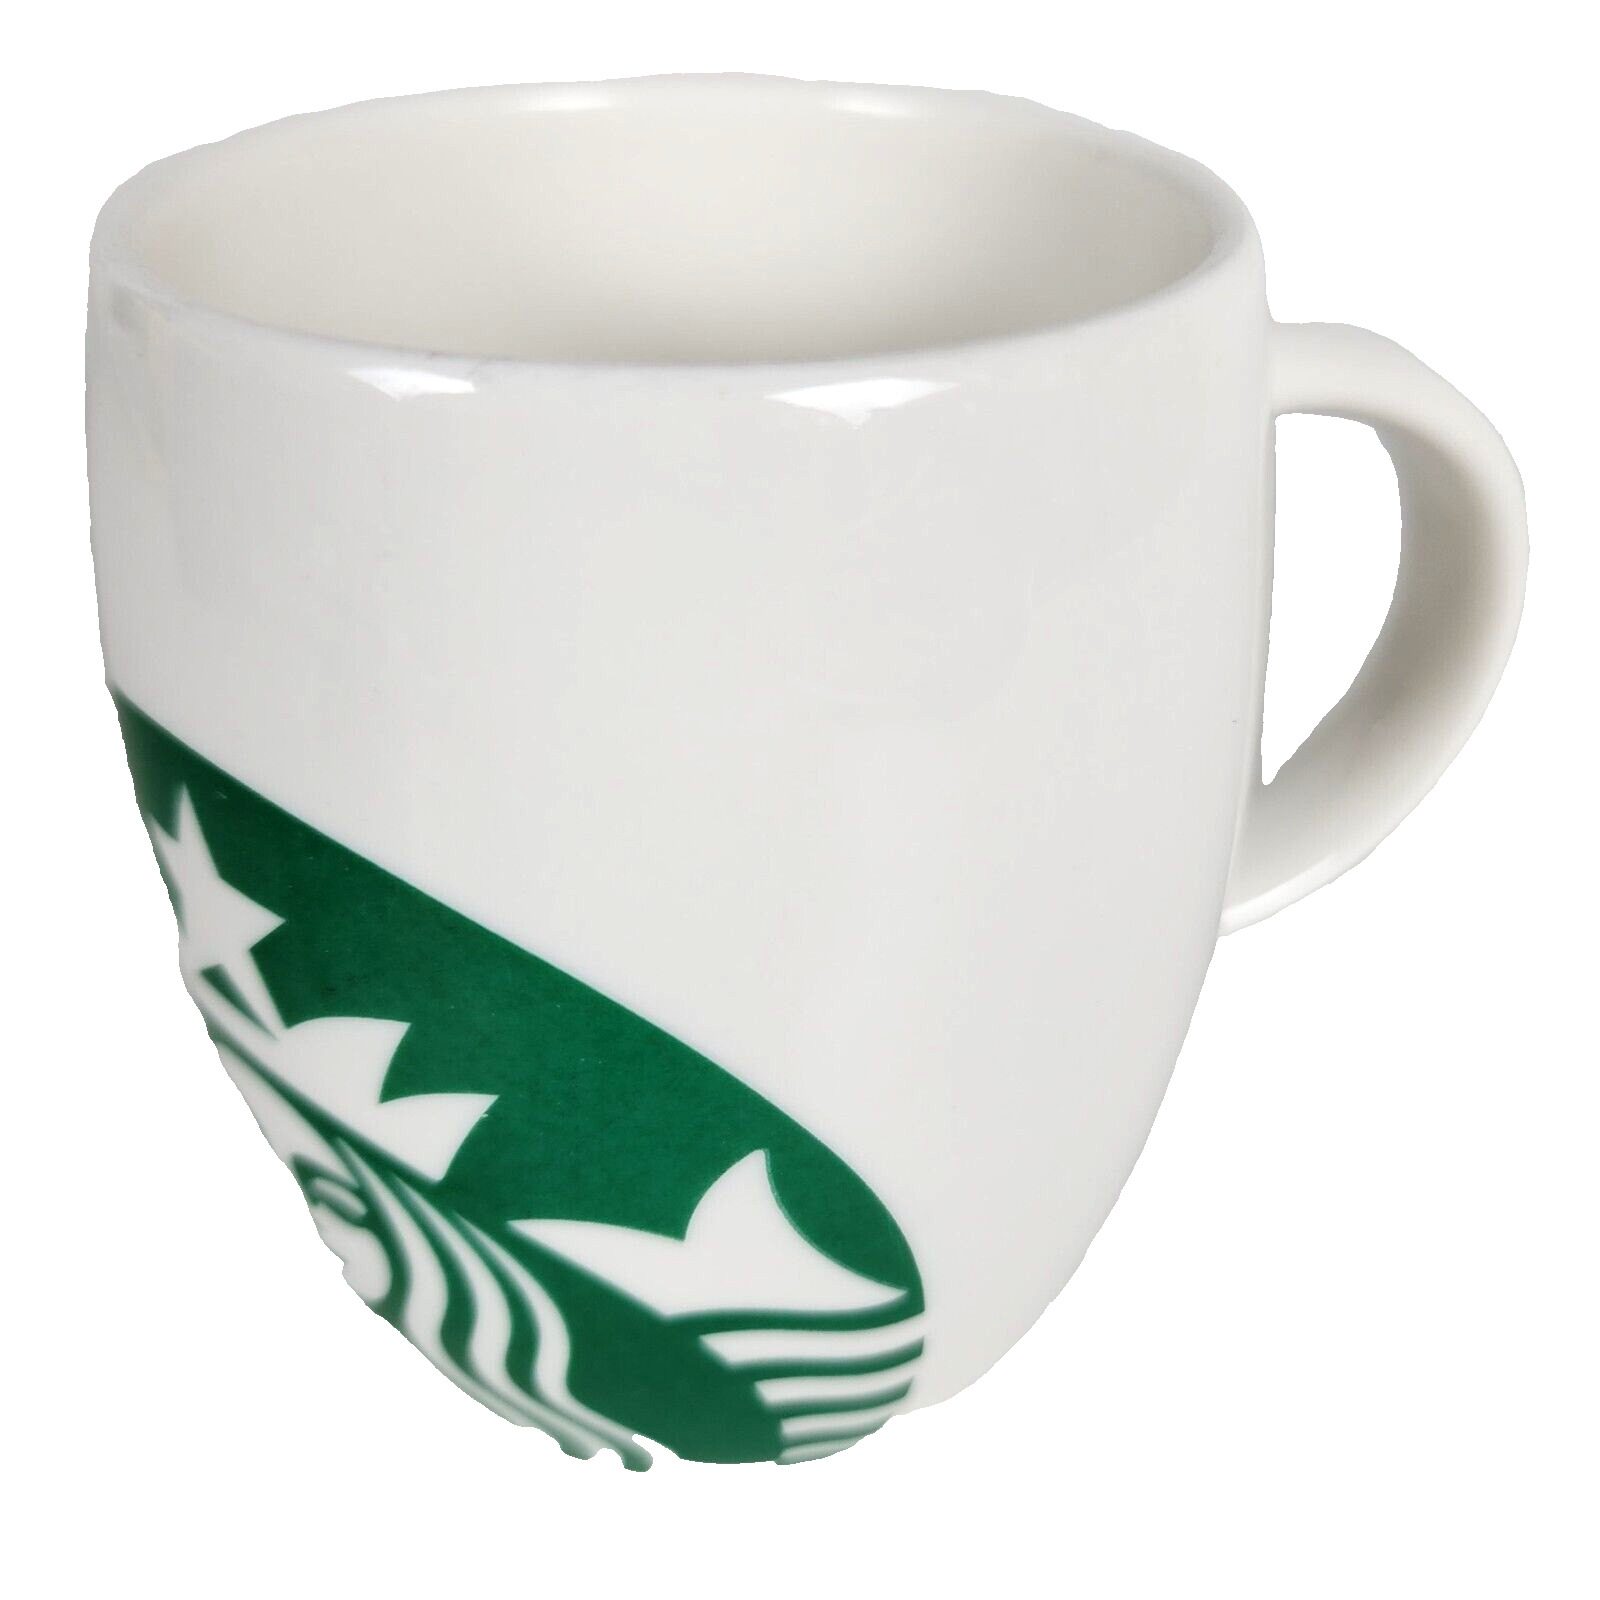 Starbucks Coffee Cup 2010 White Barrel Matte Green Mermaid Ceramic Mug Handle